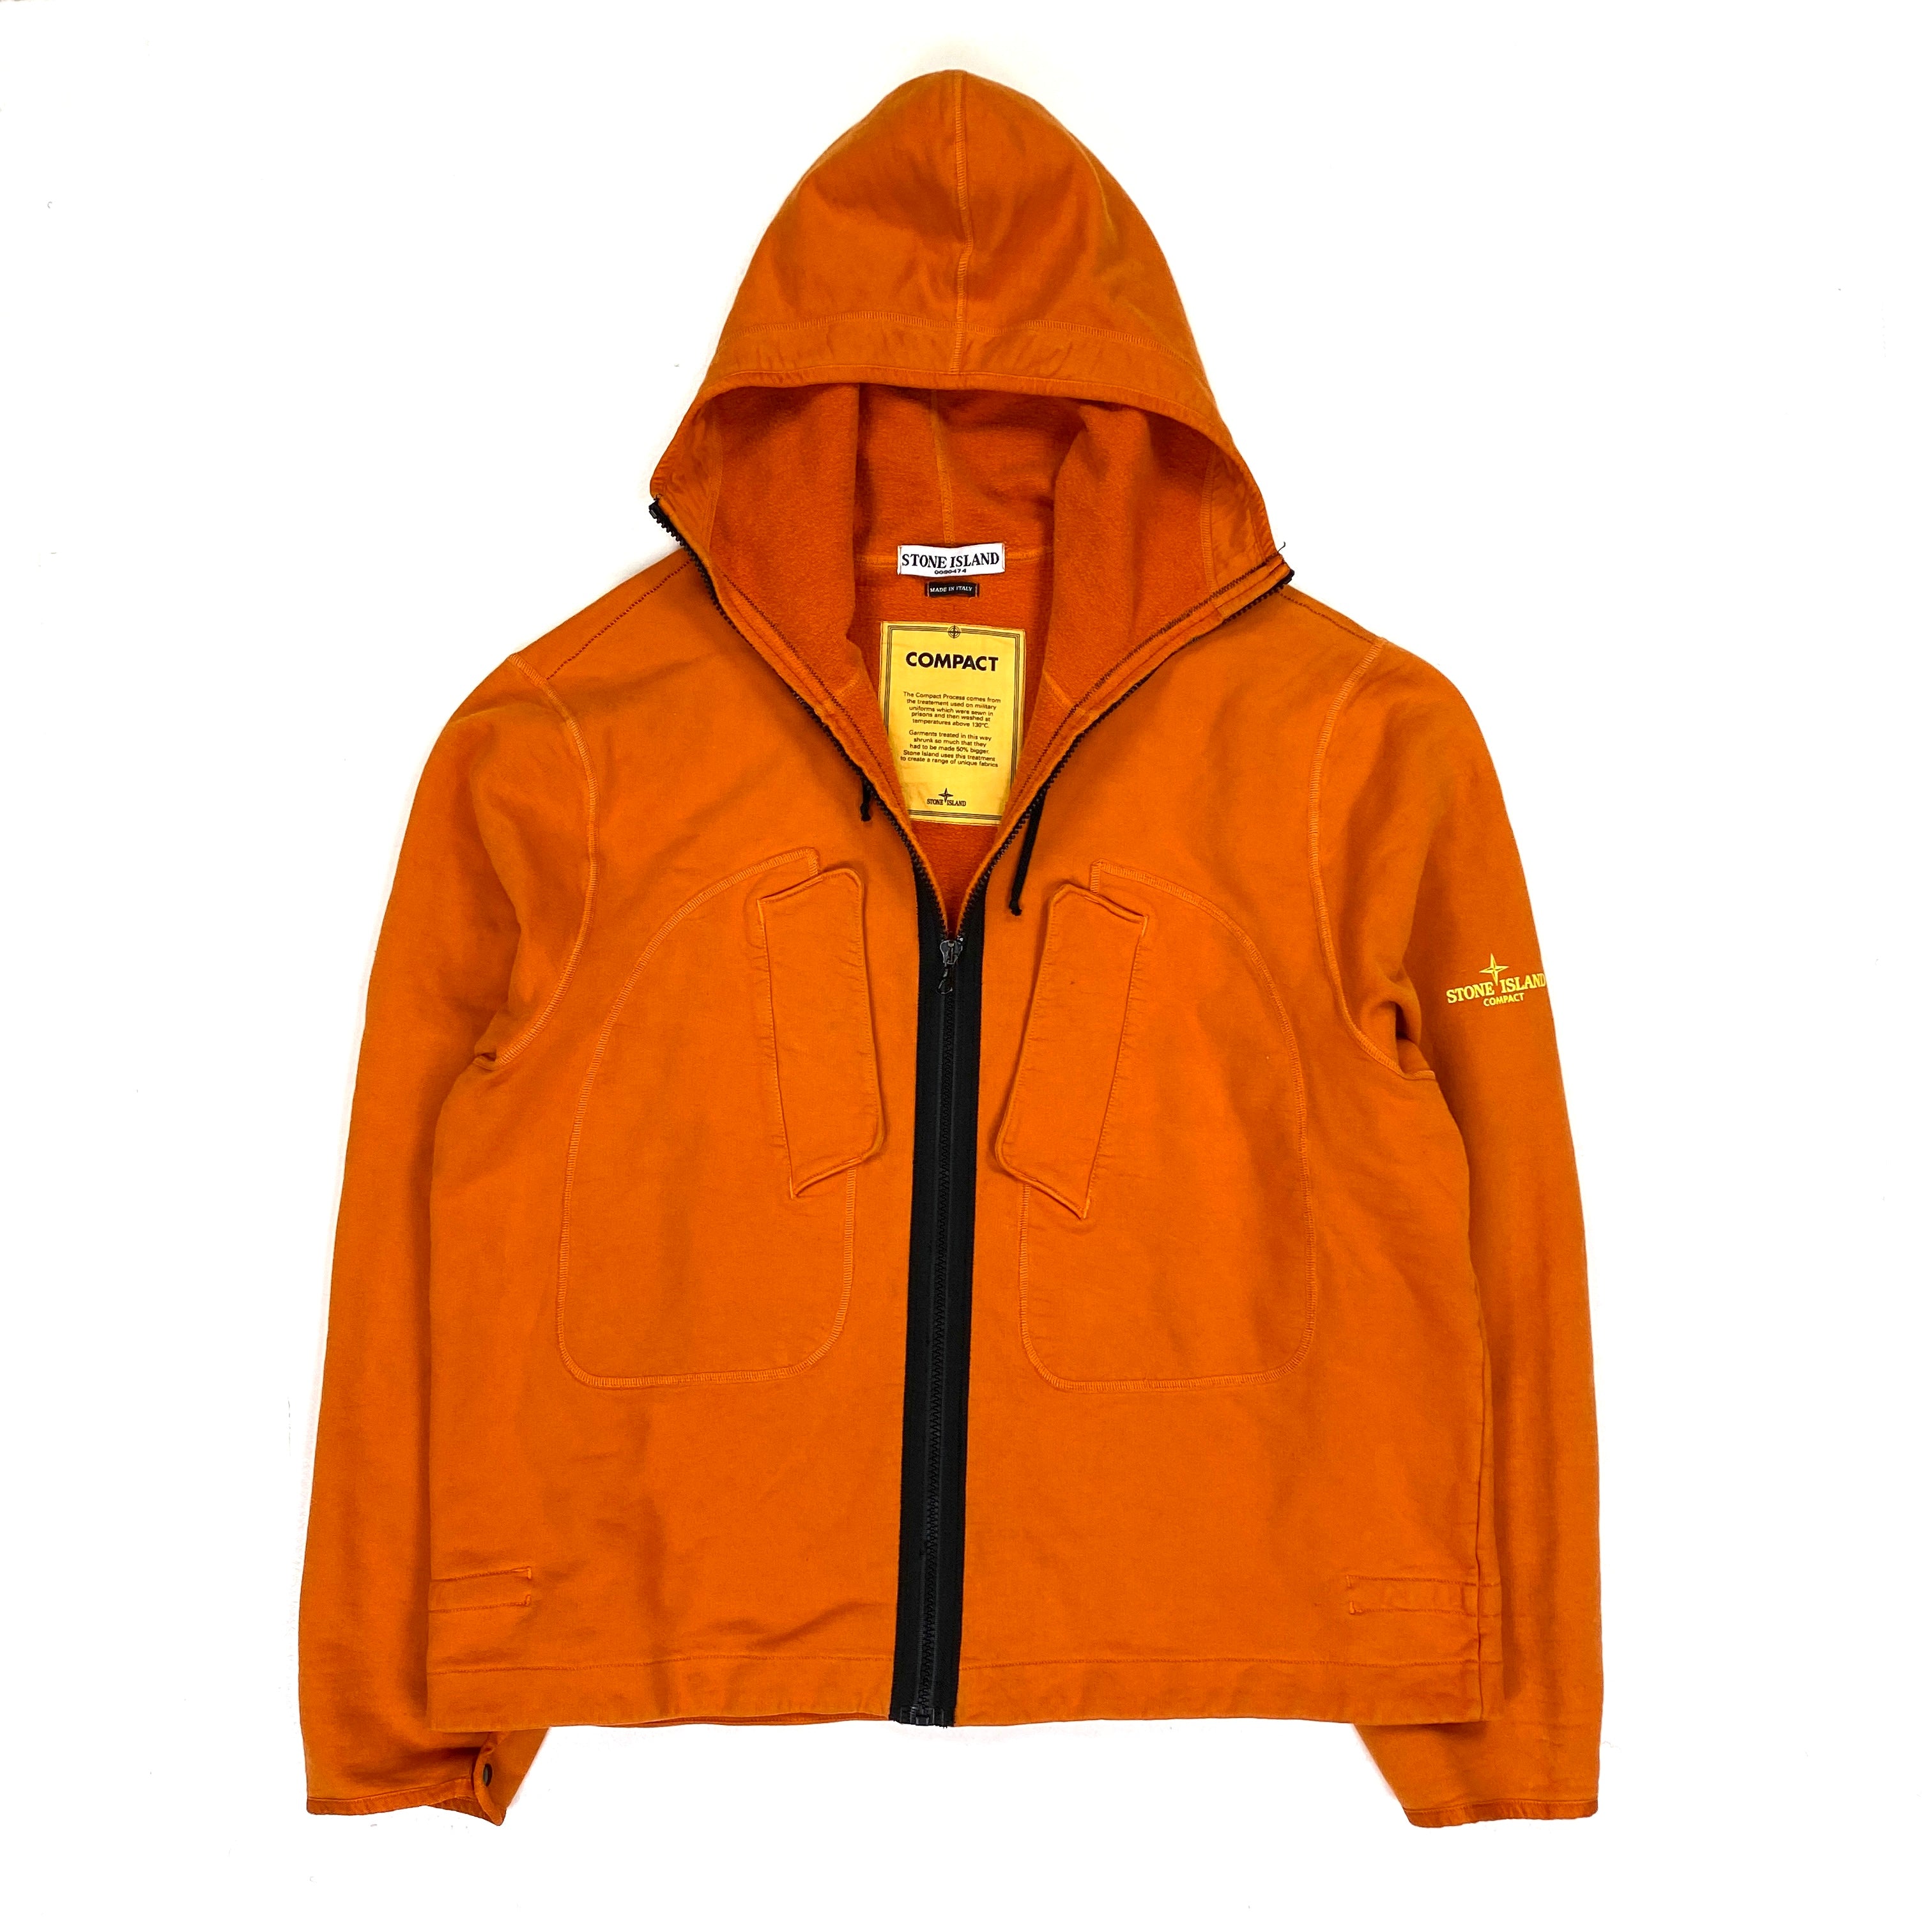 Stone Island Orange Compact 2003 Jacket – Mat's Island